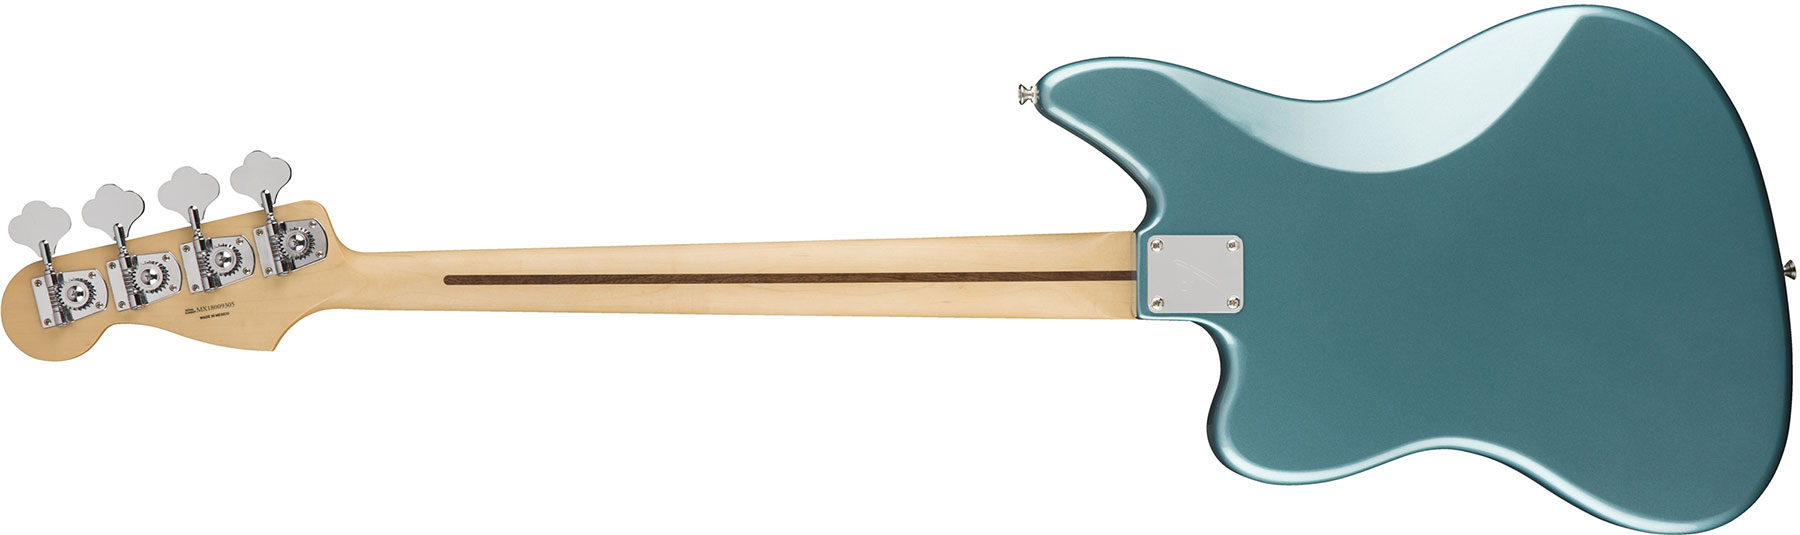 Fender Jaguar Bass Player Mex Mn - Tidepool - Basse Électrique Solid Body - Variation 1